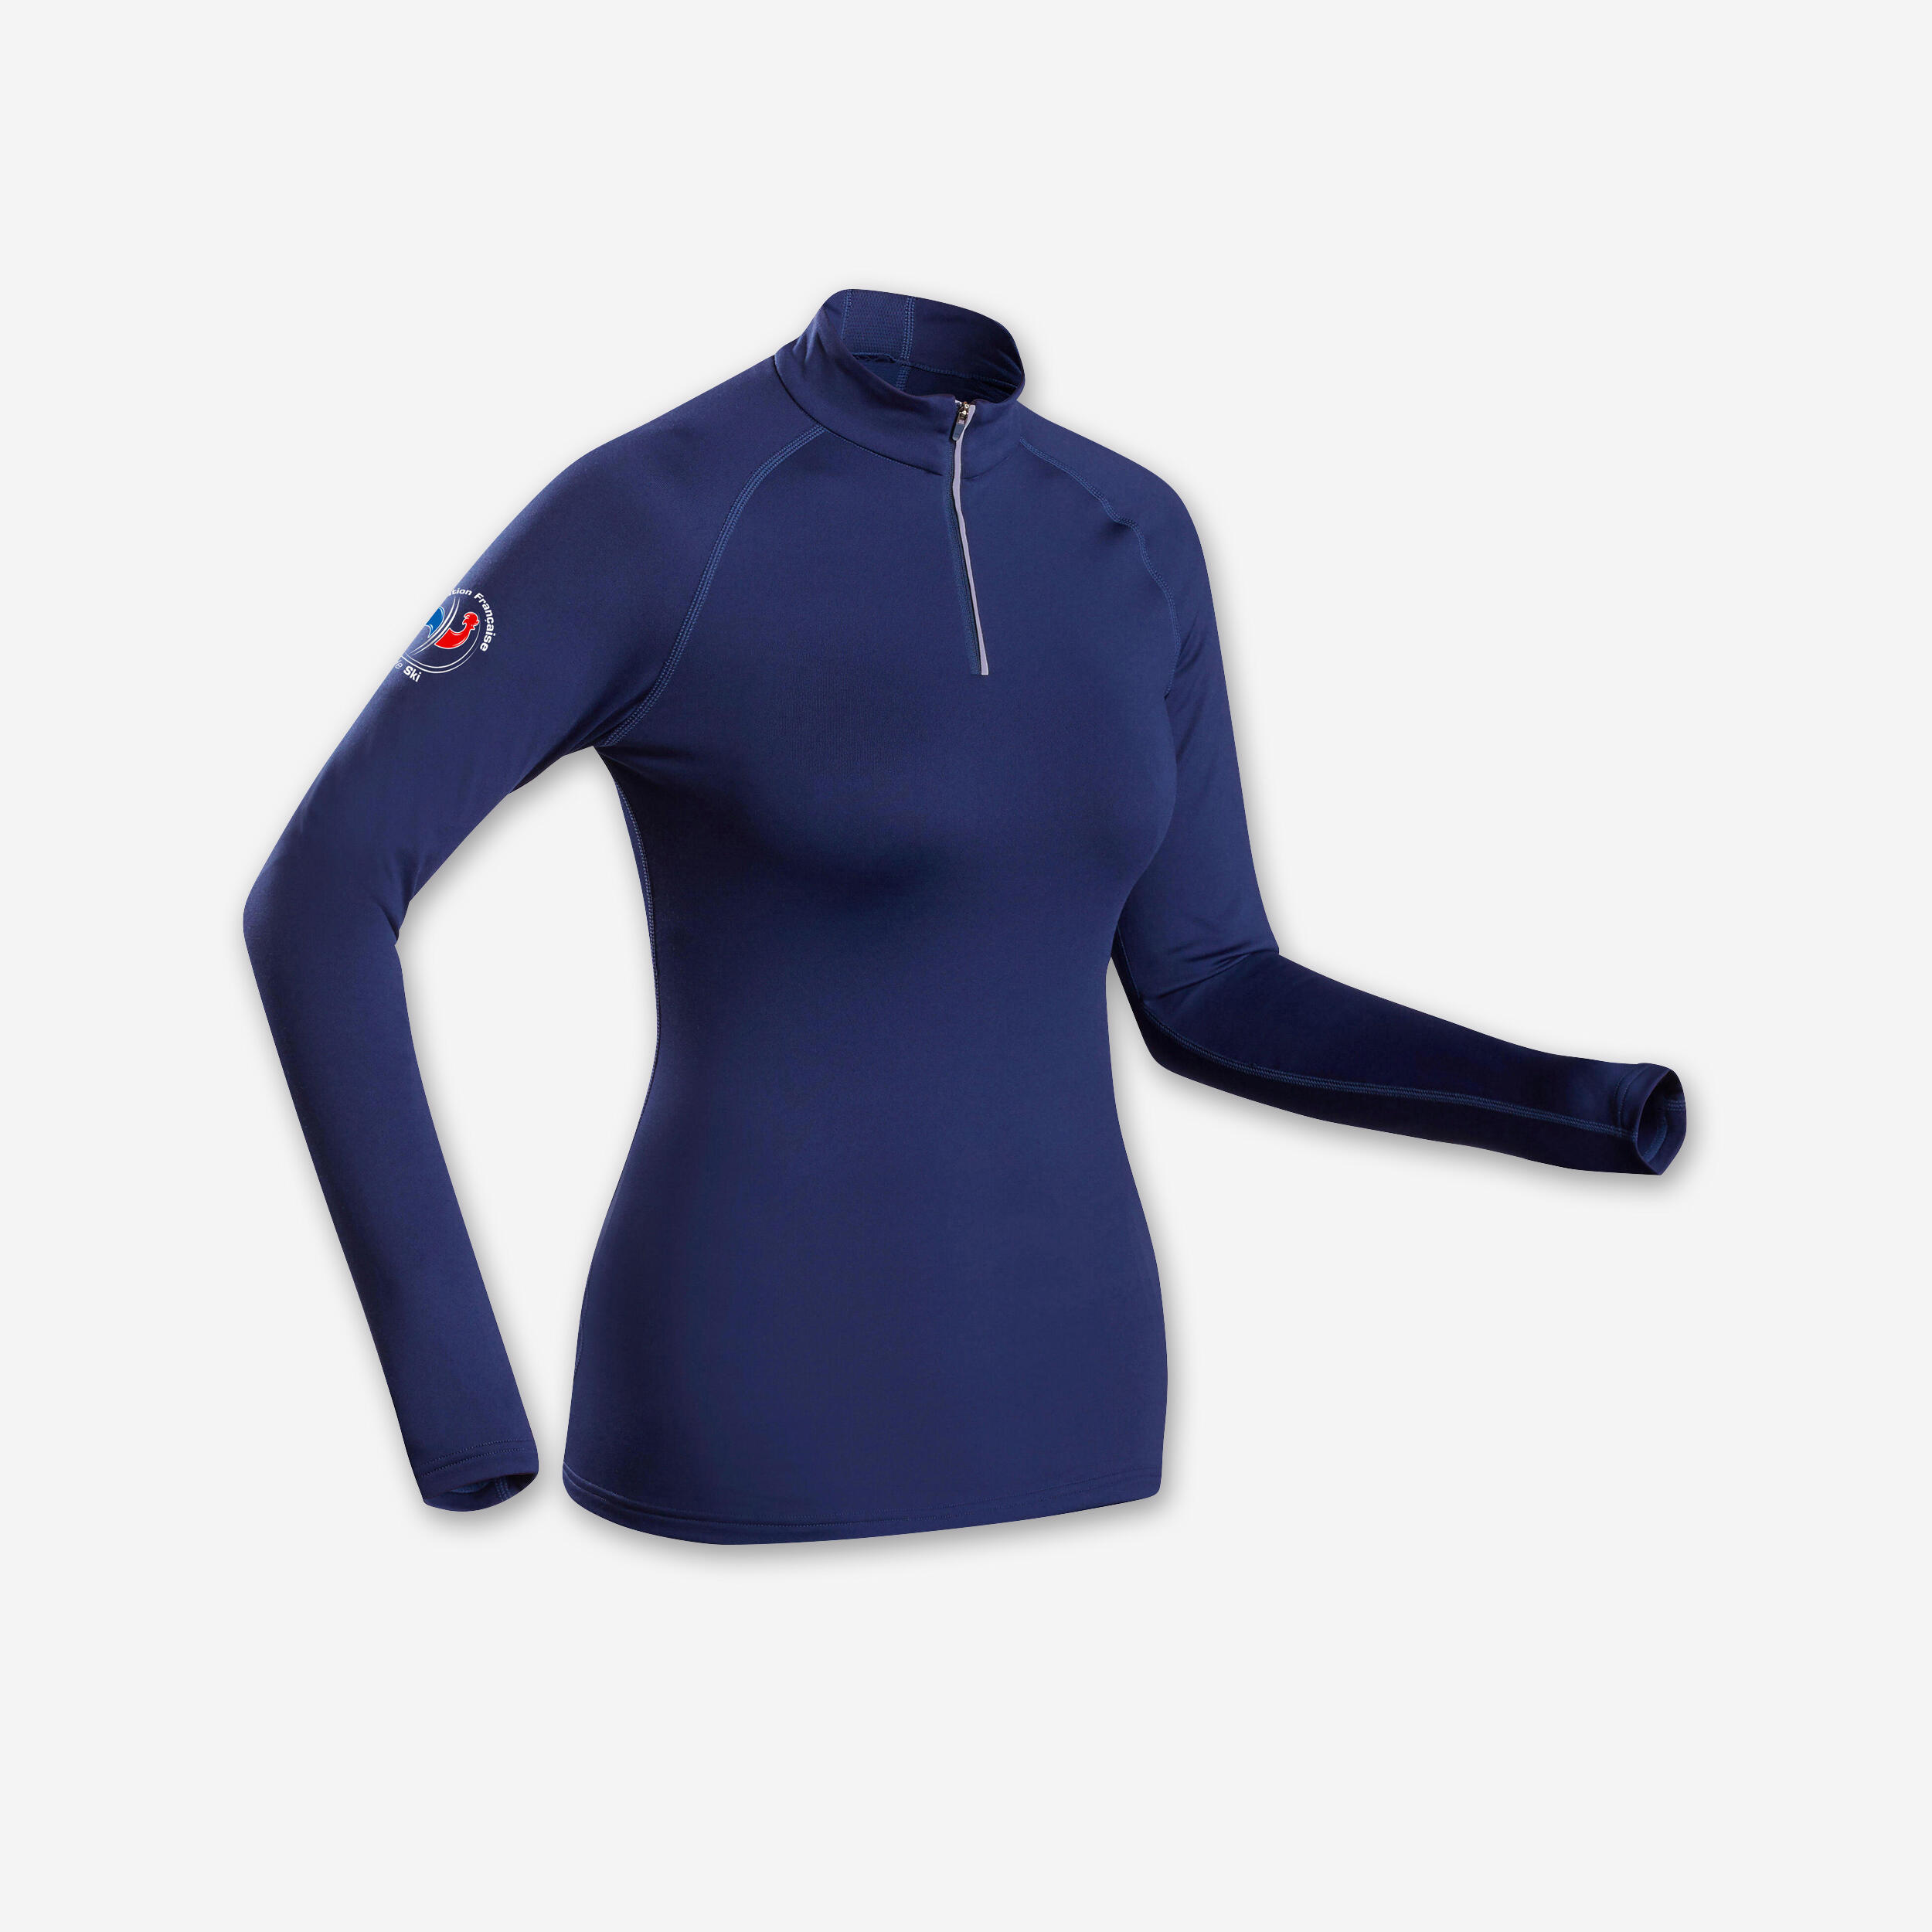 Women's 500 FFS thermal base layer 1/2 zip ski top - navy blue WEDZE